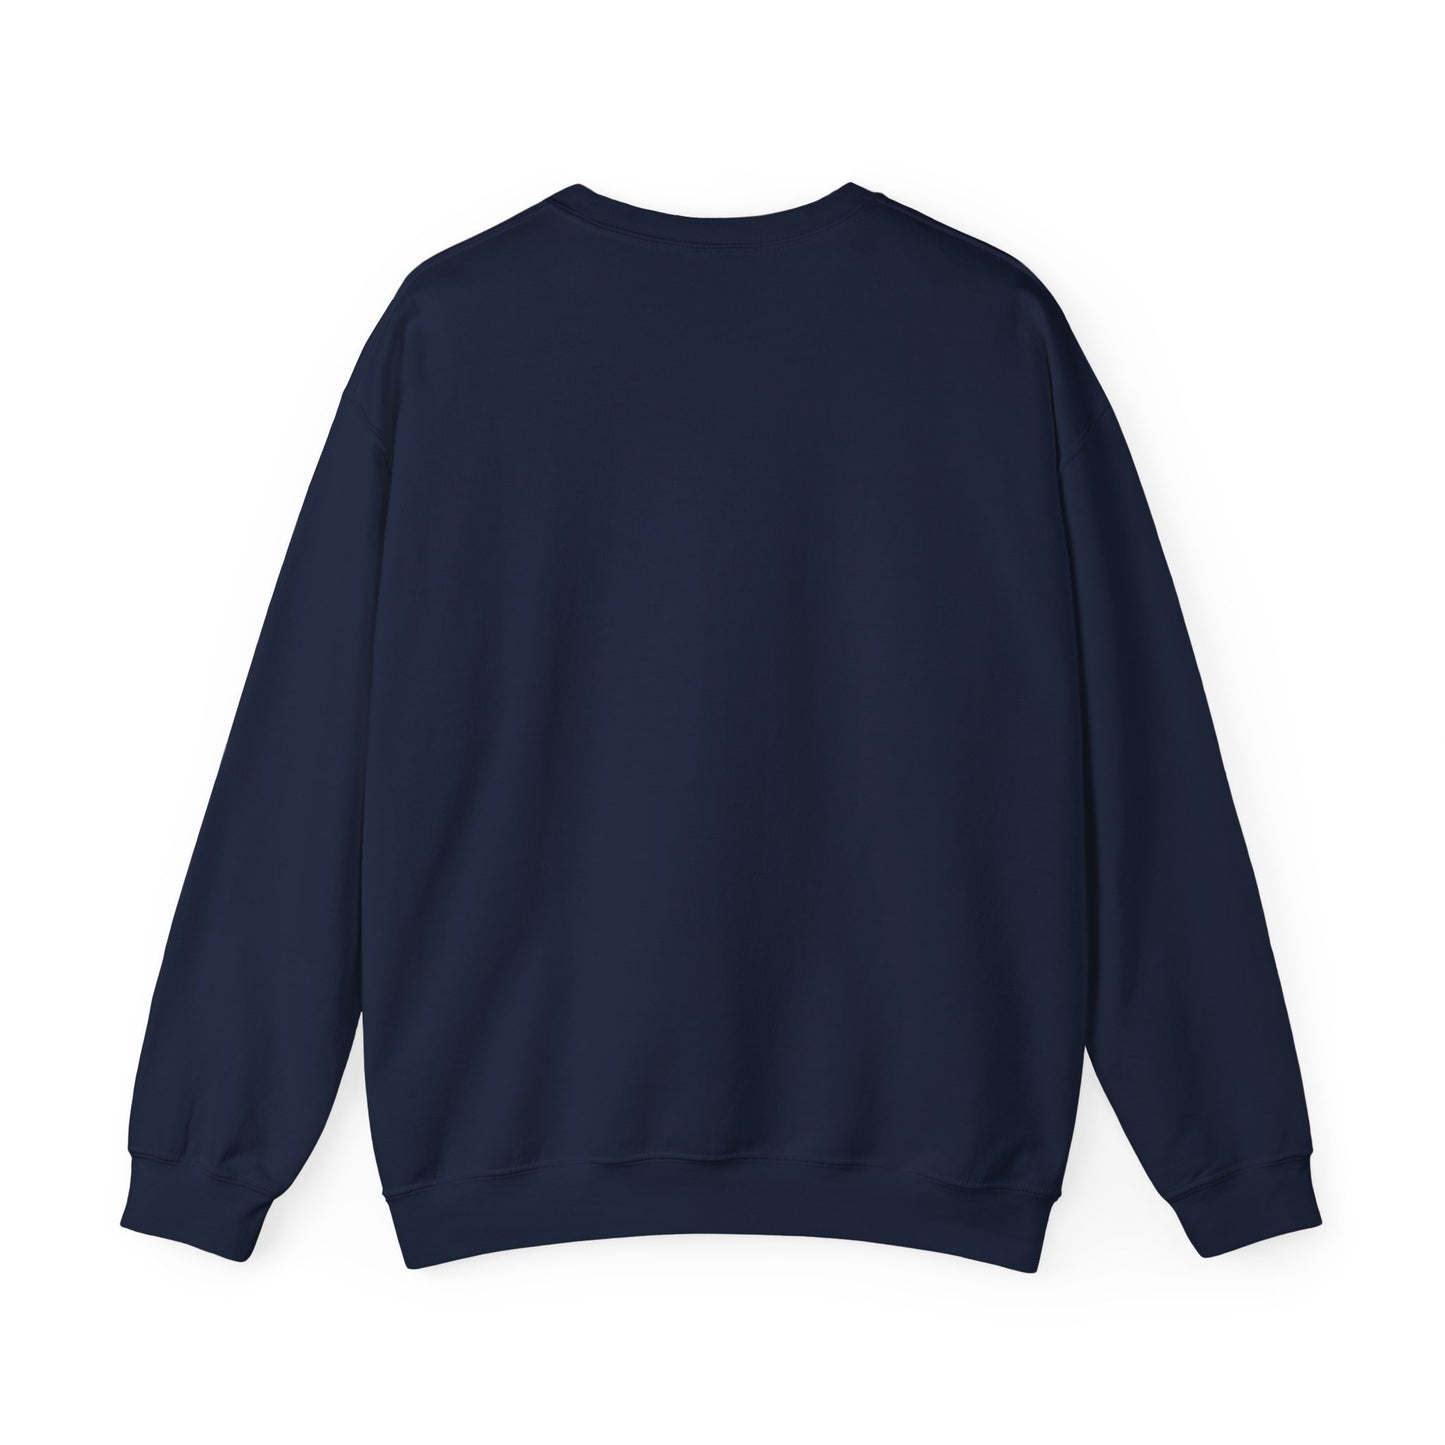 Cool Aunt Unisex Heavy Blend™ Crewneck Sweatshirt